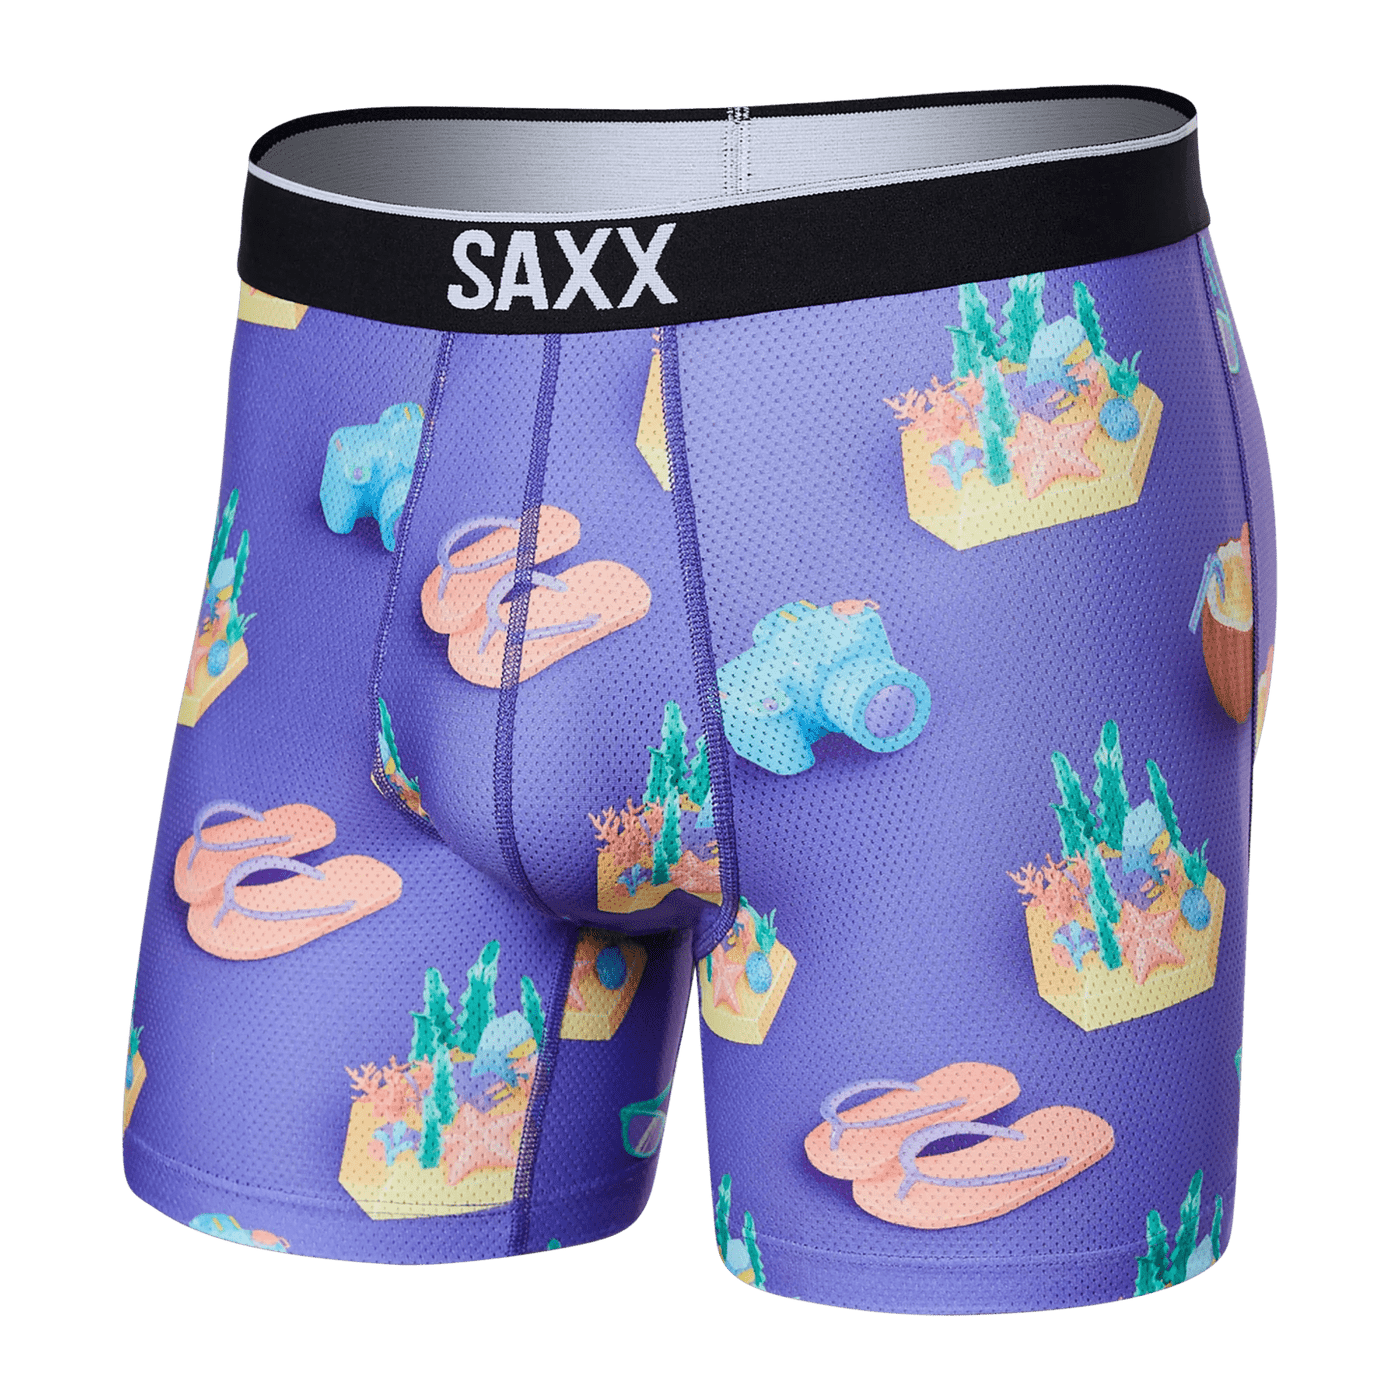 Saxx Volt Boxers - Vacation Plans - TheHockeyShop.com